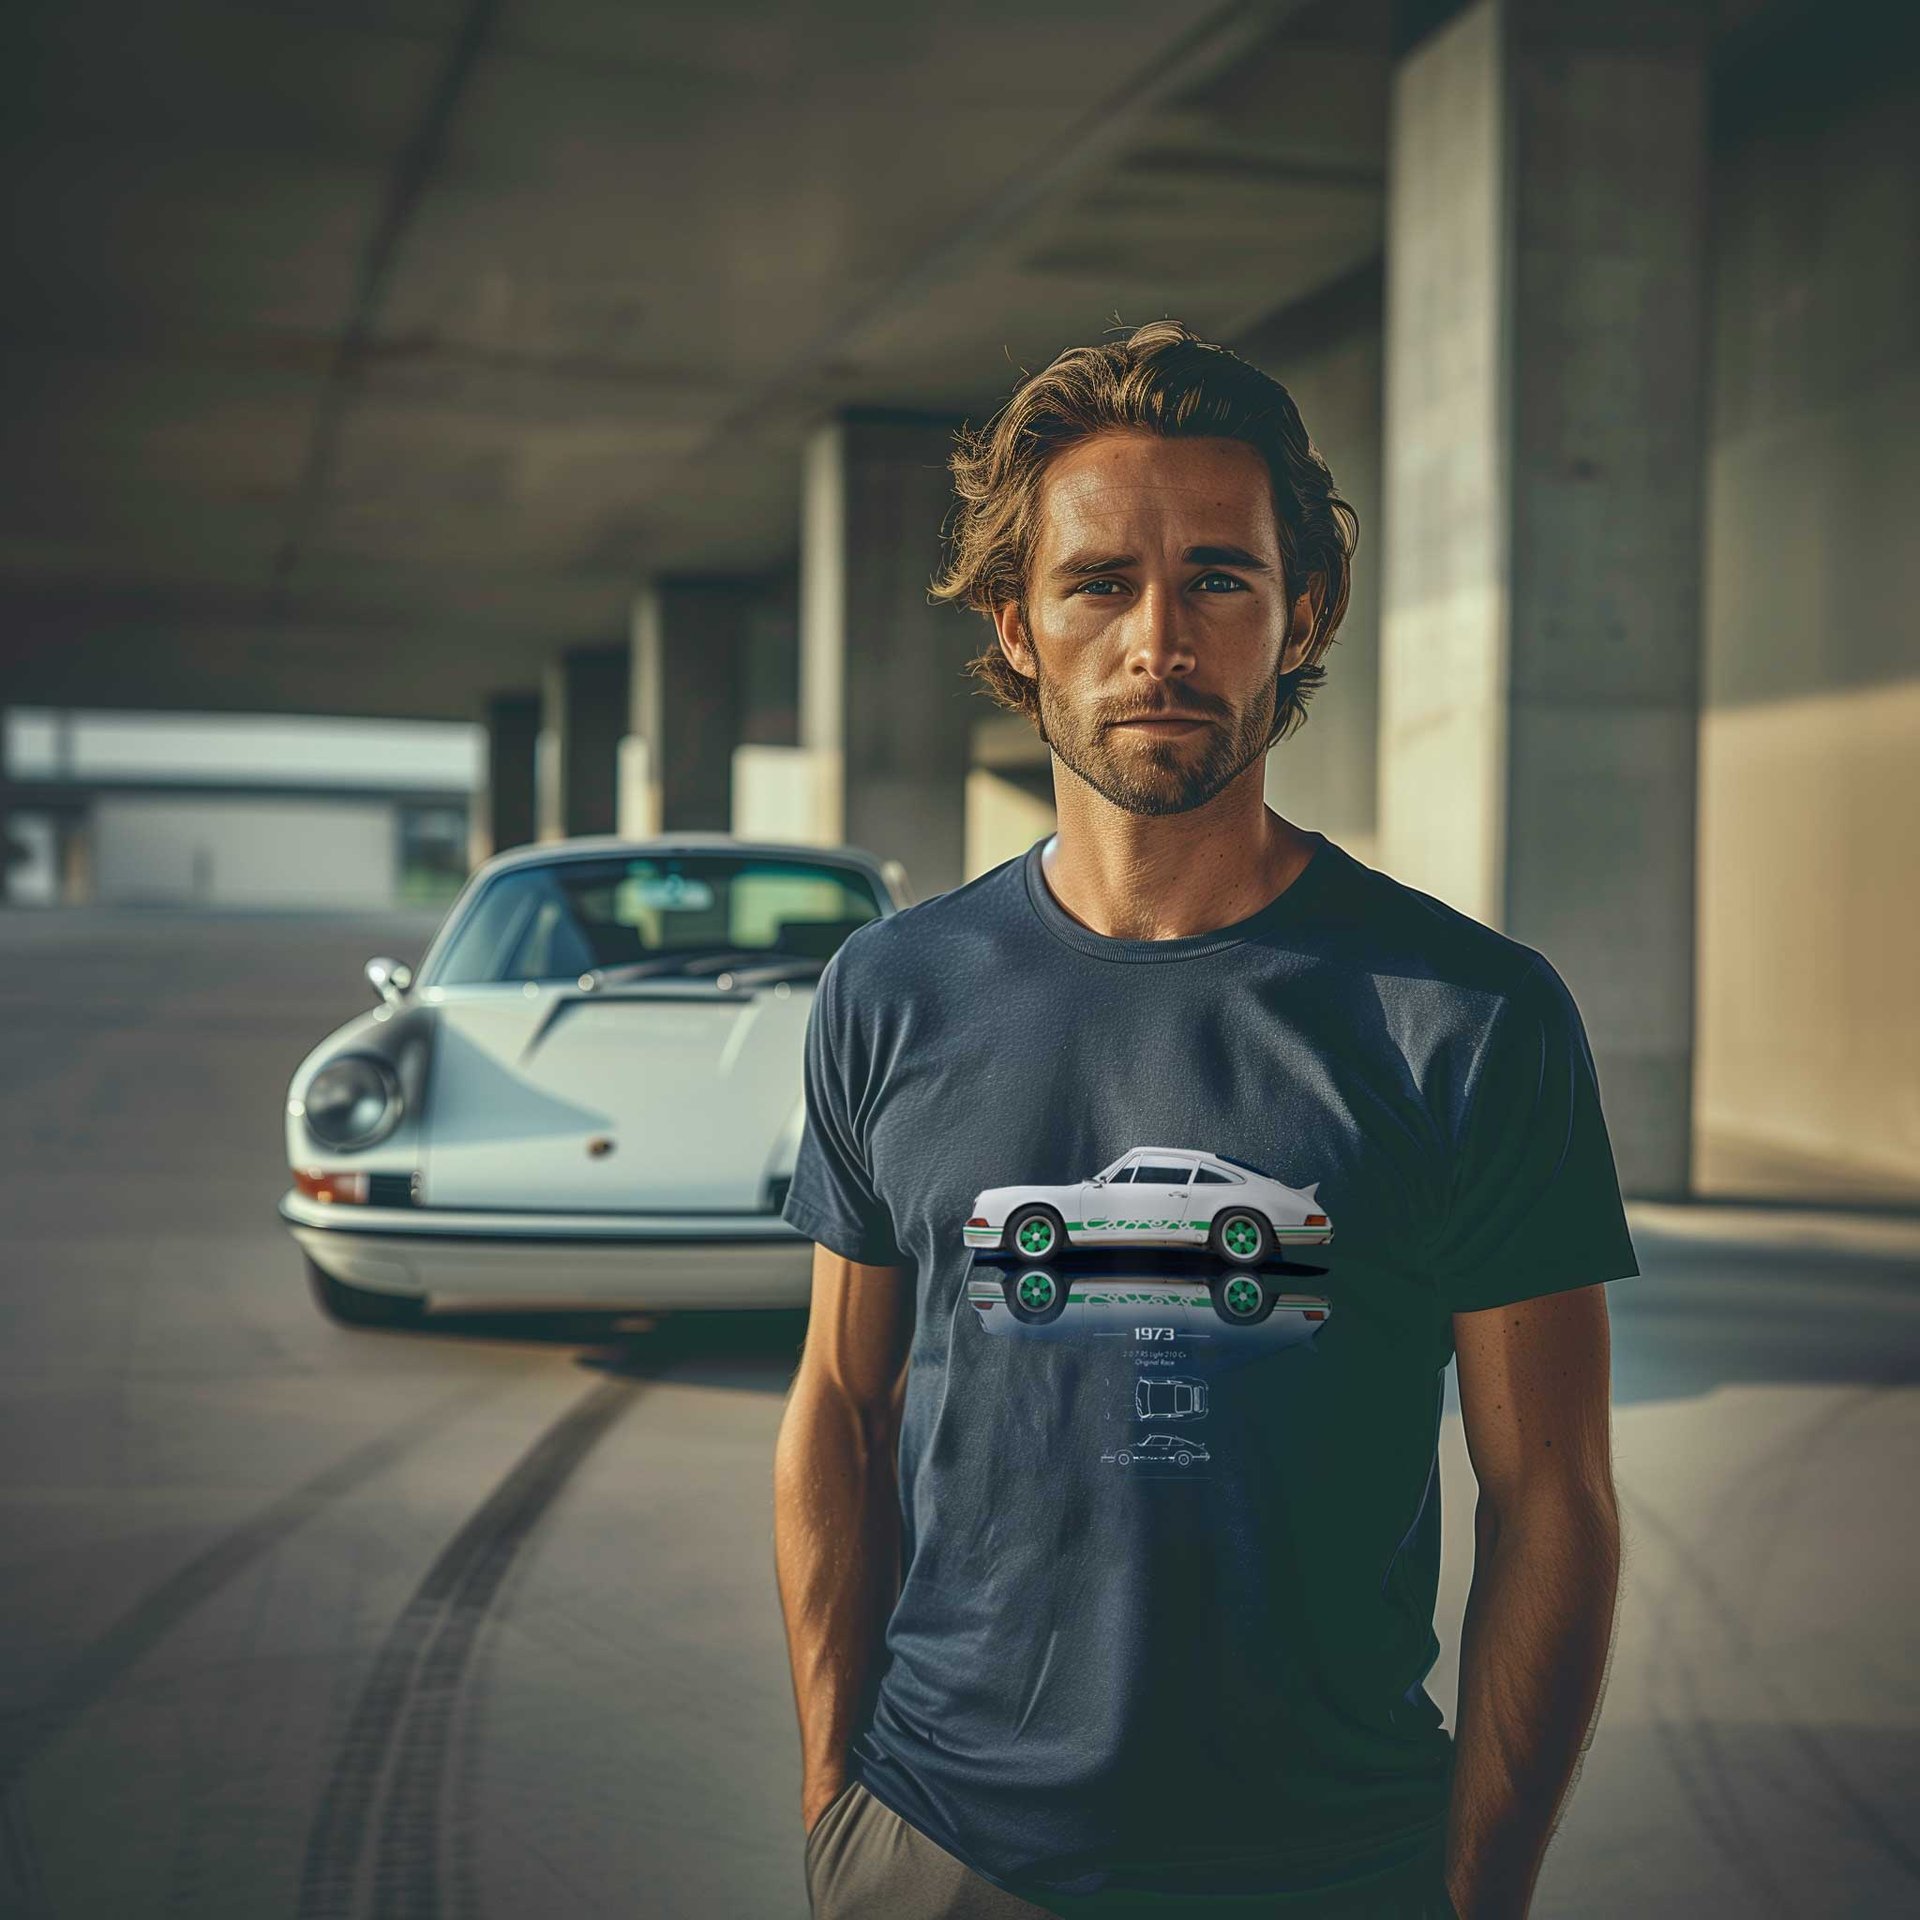 Man with classic car t-shirt, vintage Porsche background.